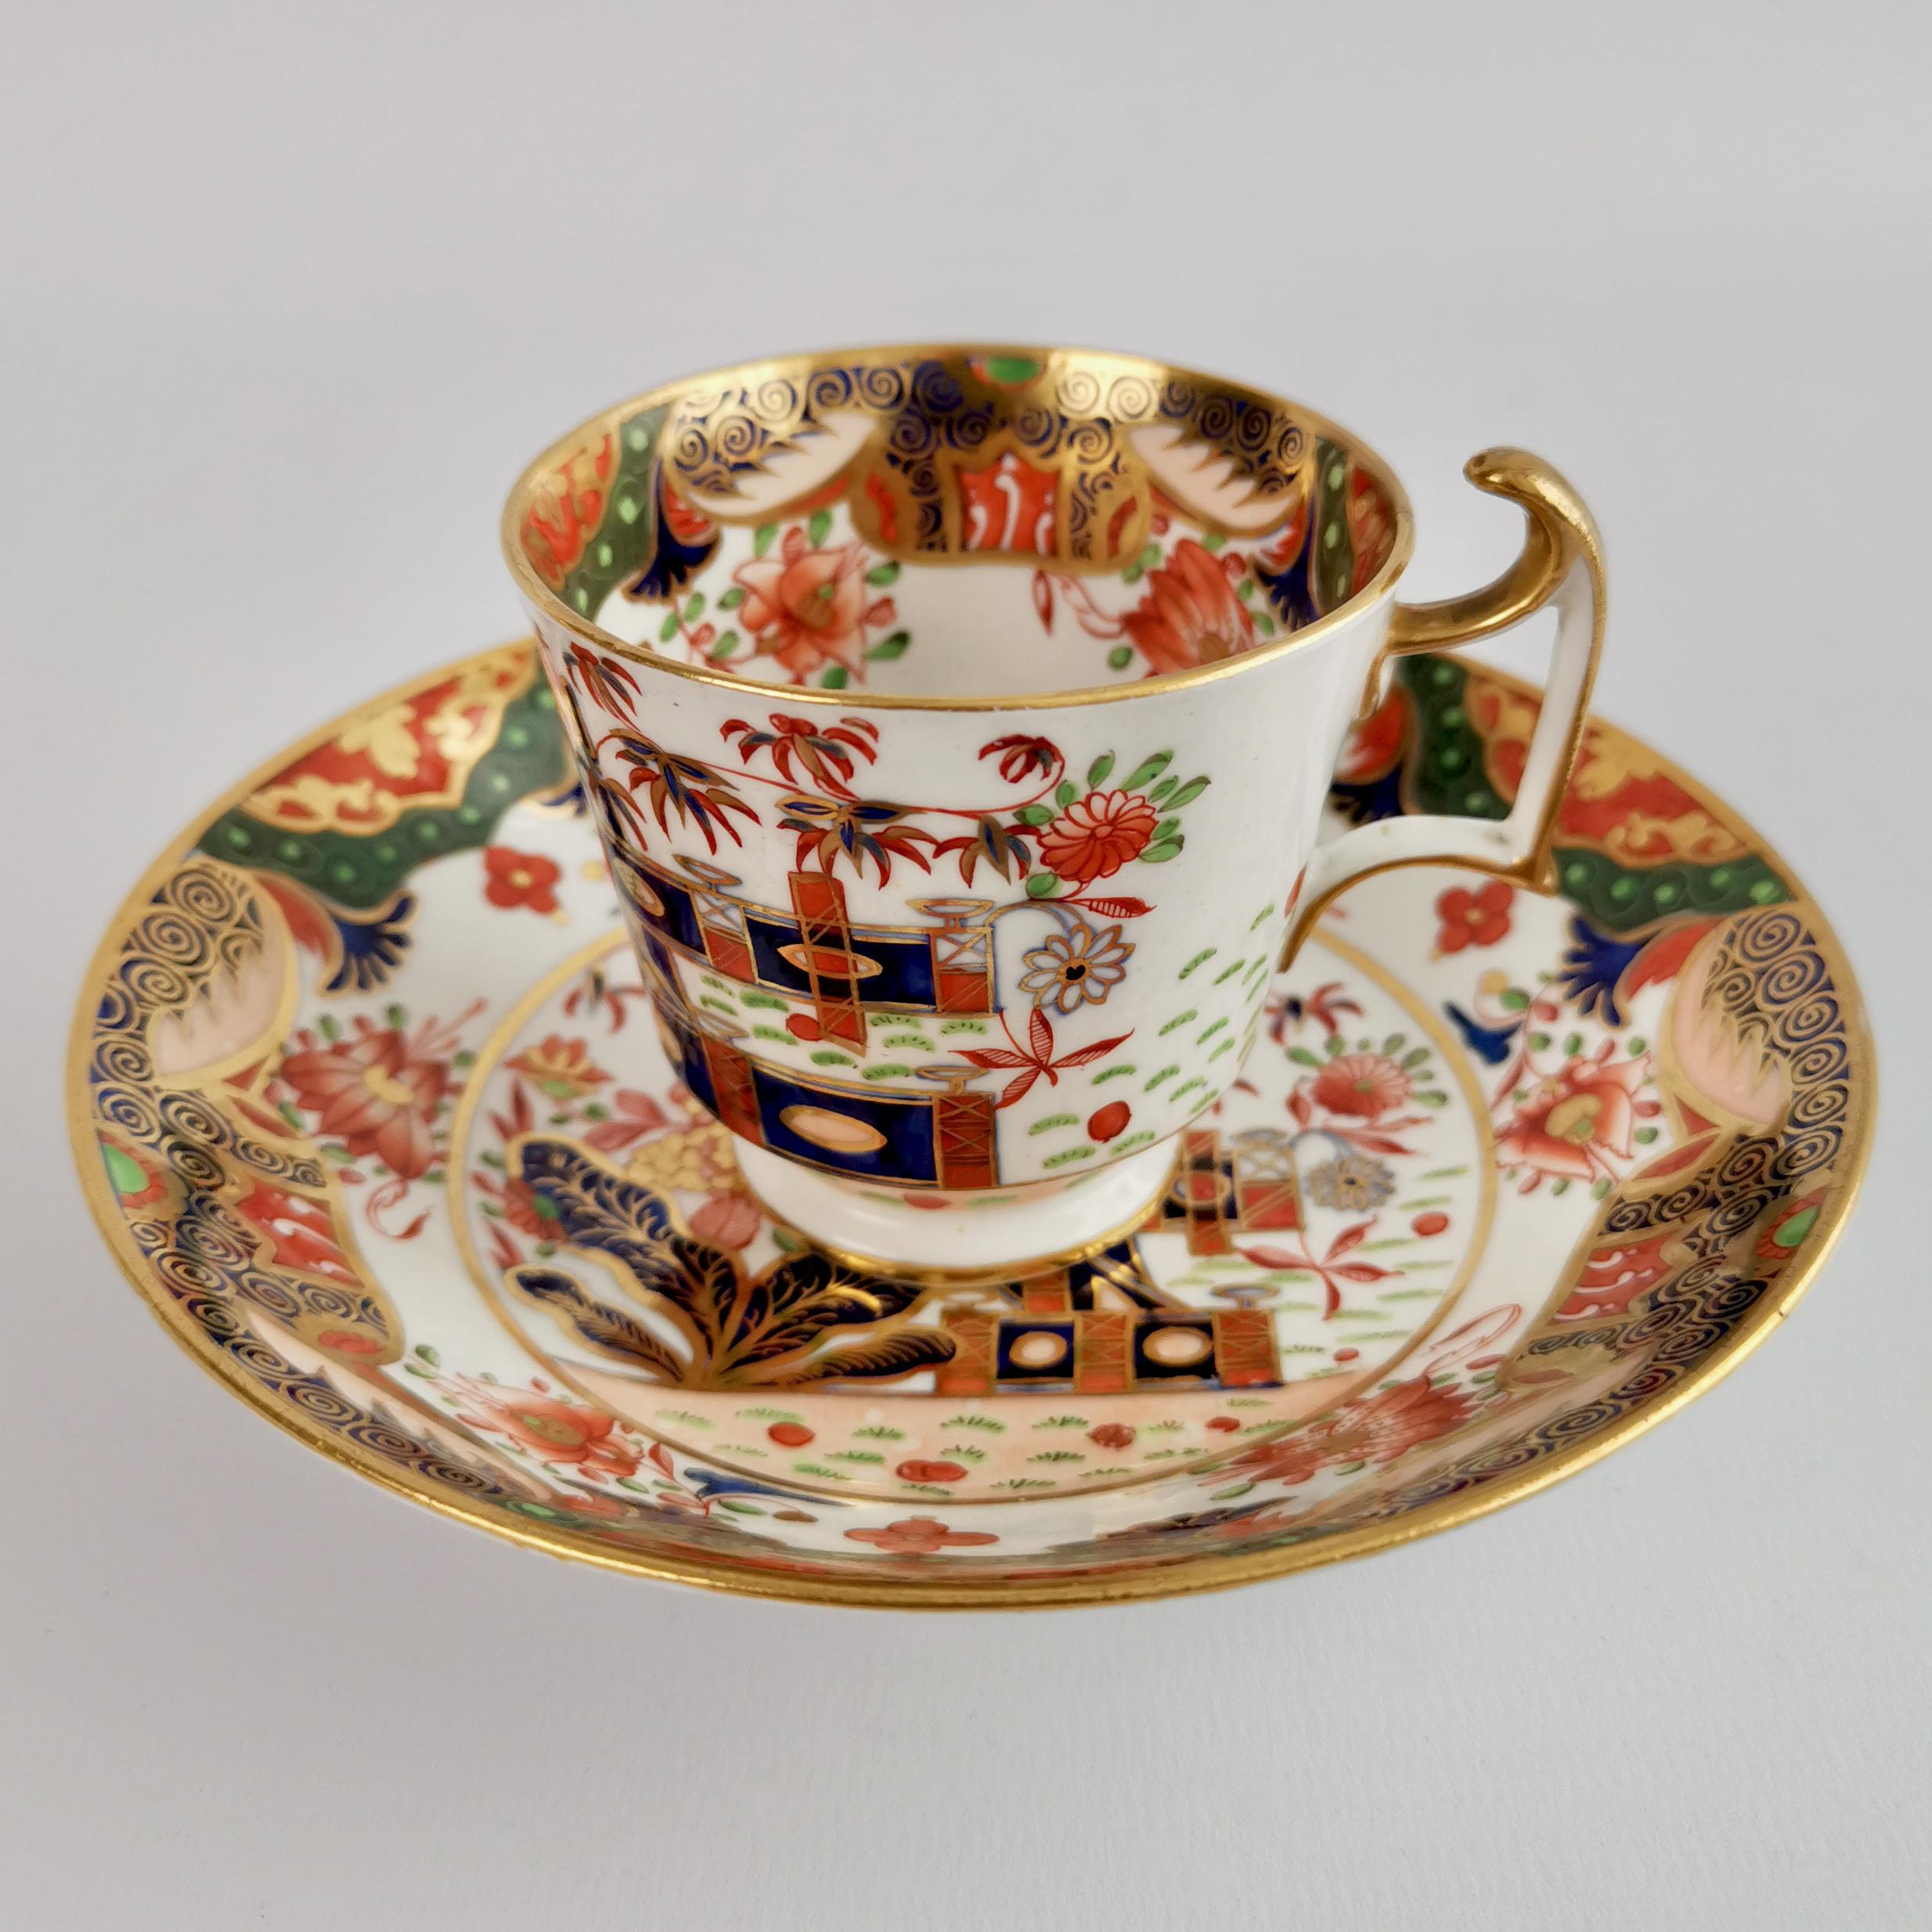 Hand-Painted Porcelain Teacup Trio, Spode Imari Tobacco Leaf Patt. 967, Regency ca 1815